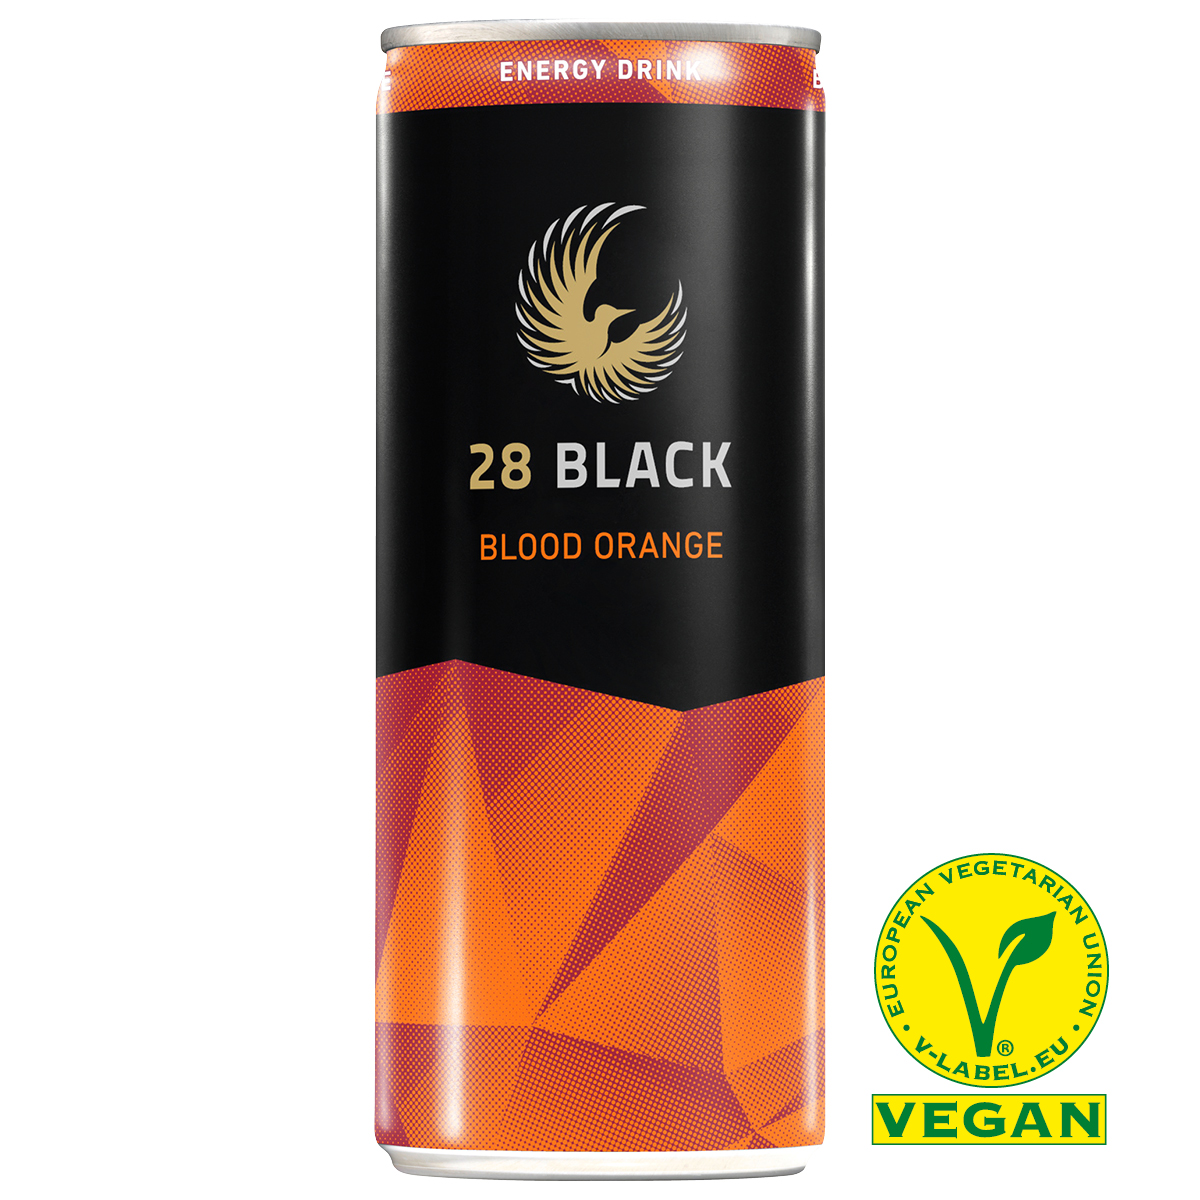 28 BLACK Blood Orange 24er Tray